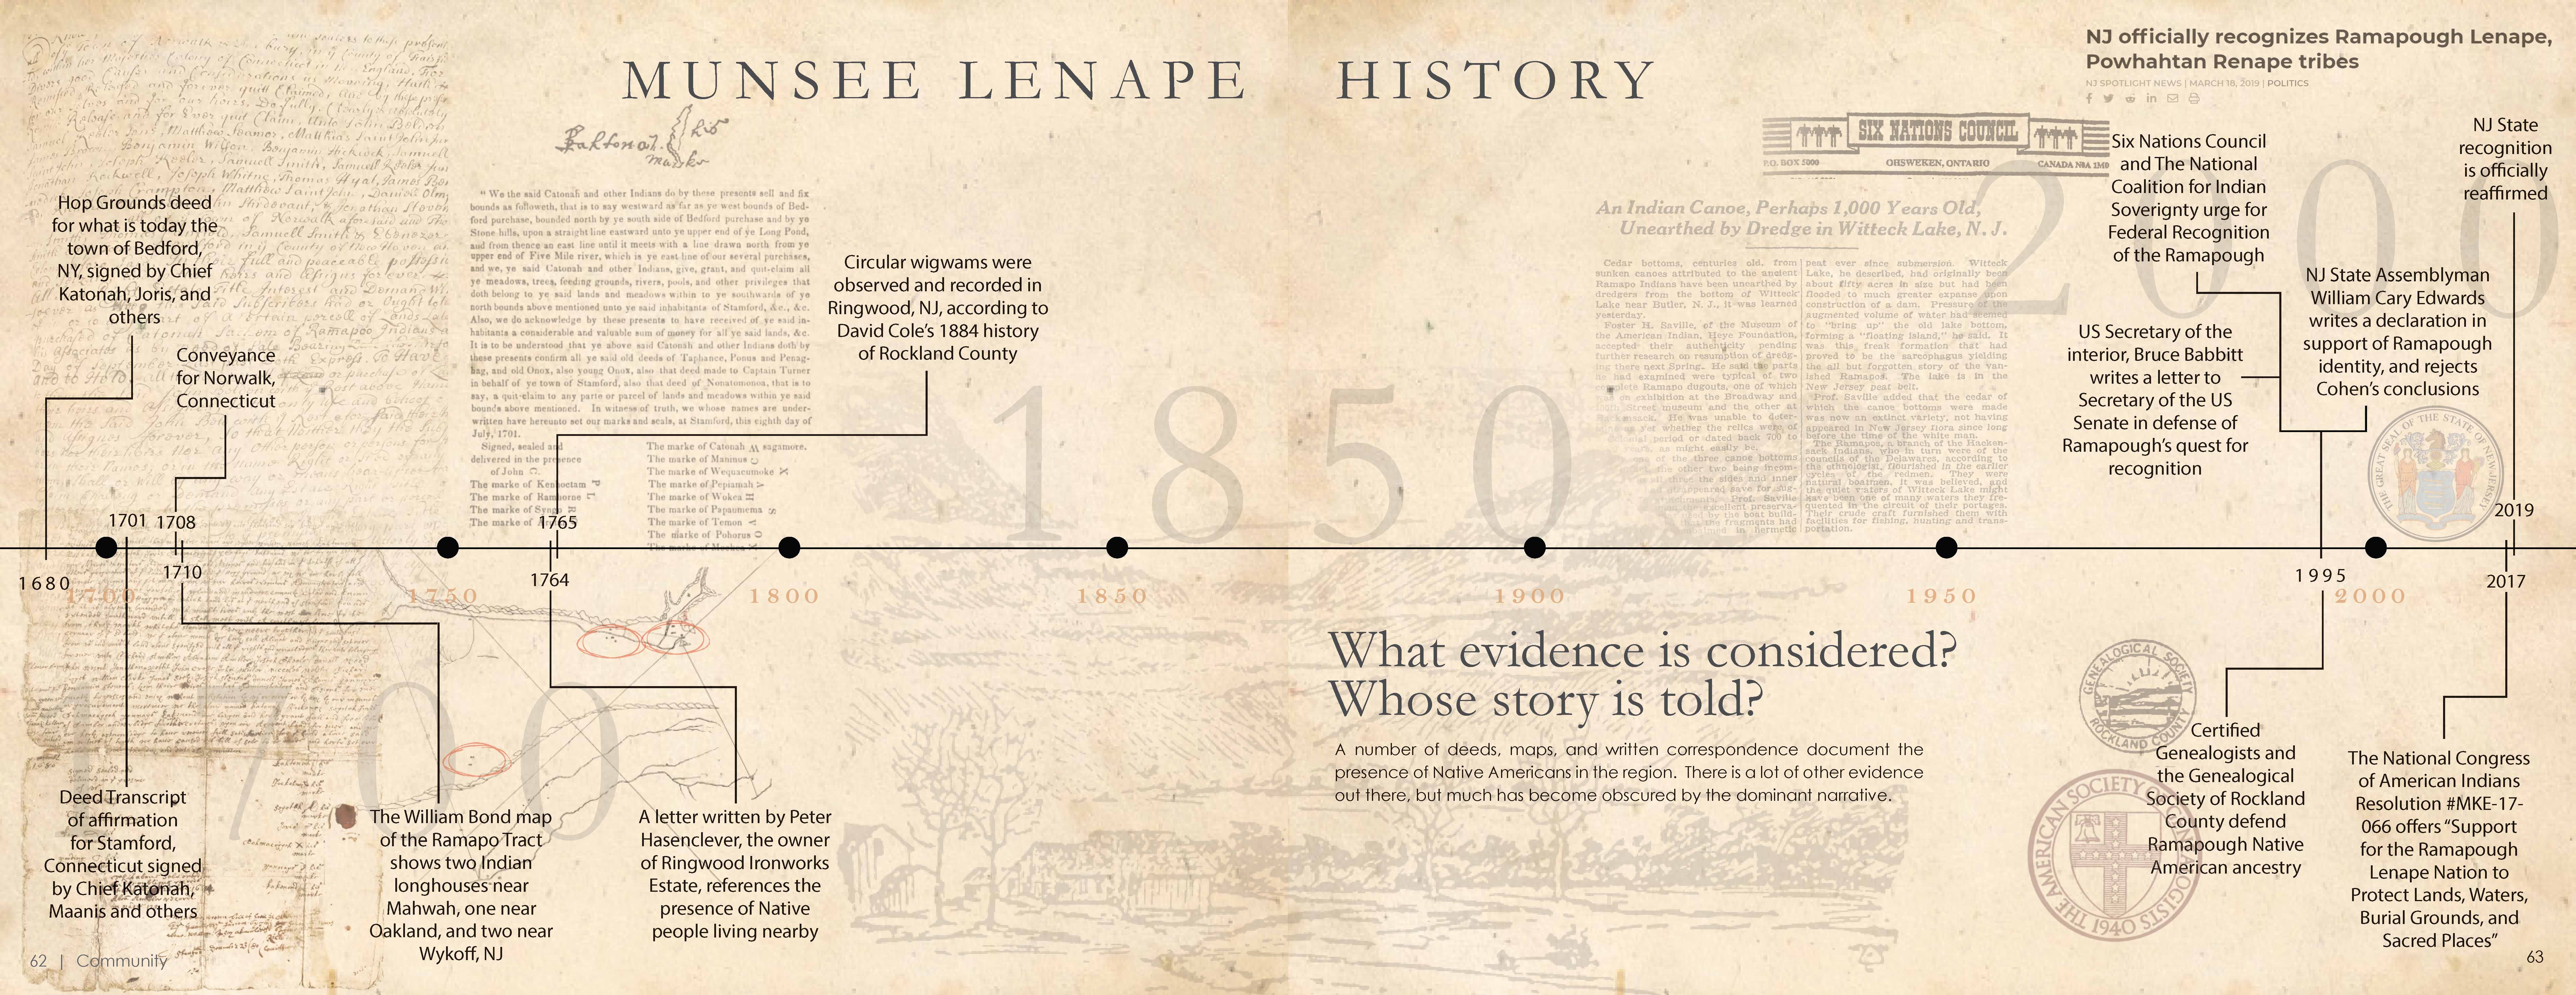 Munsee Lenape History